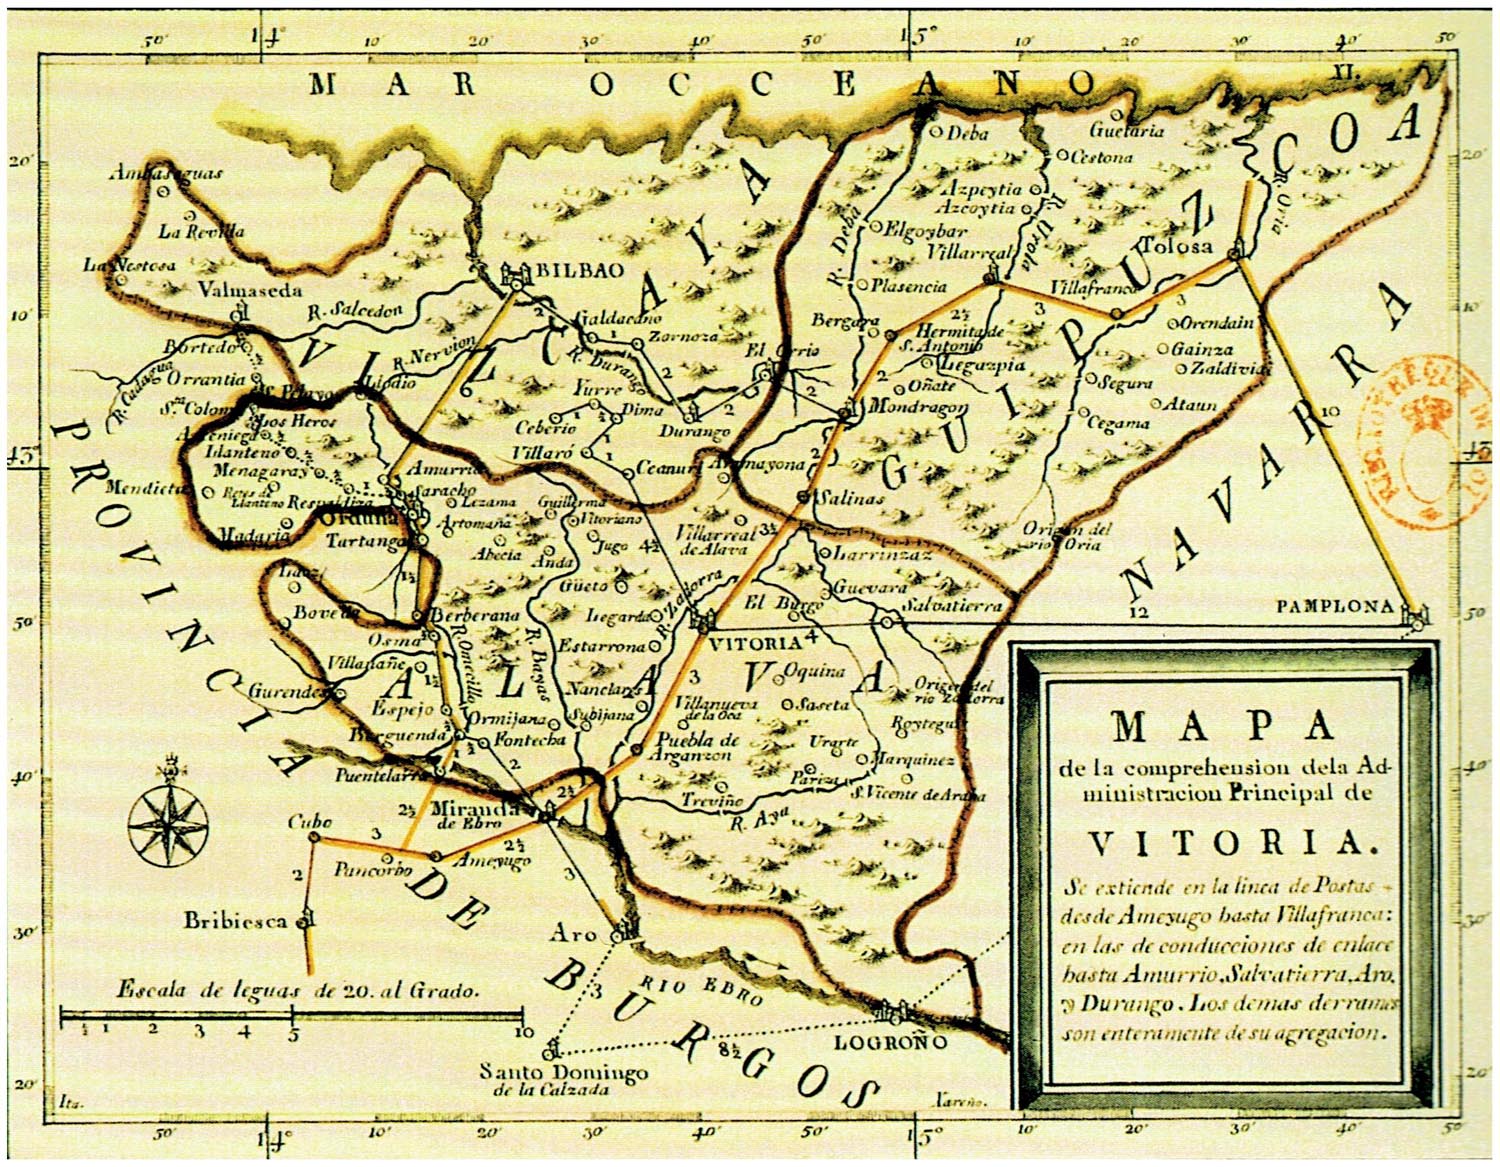 1789 mapa vitoria